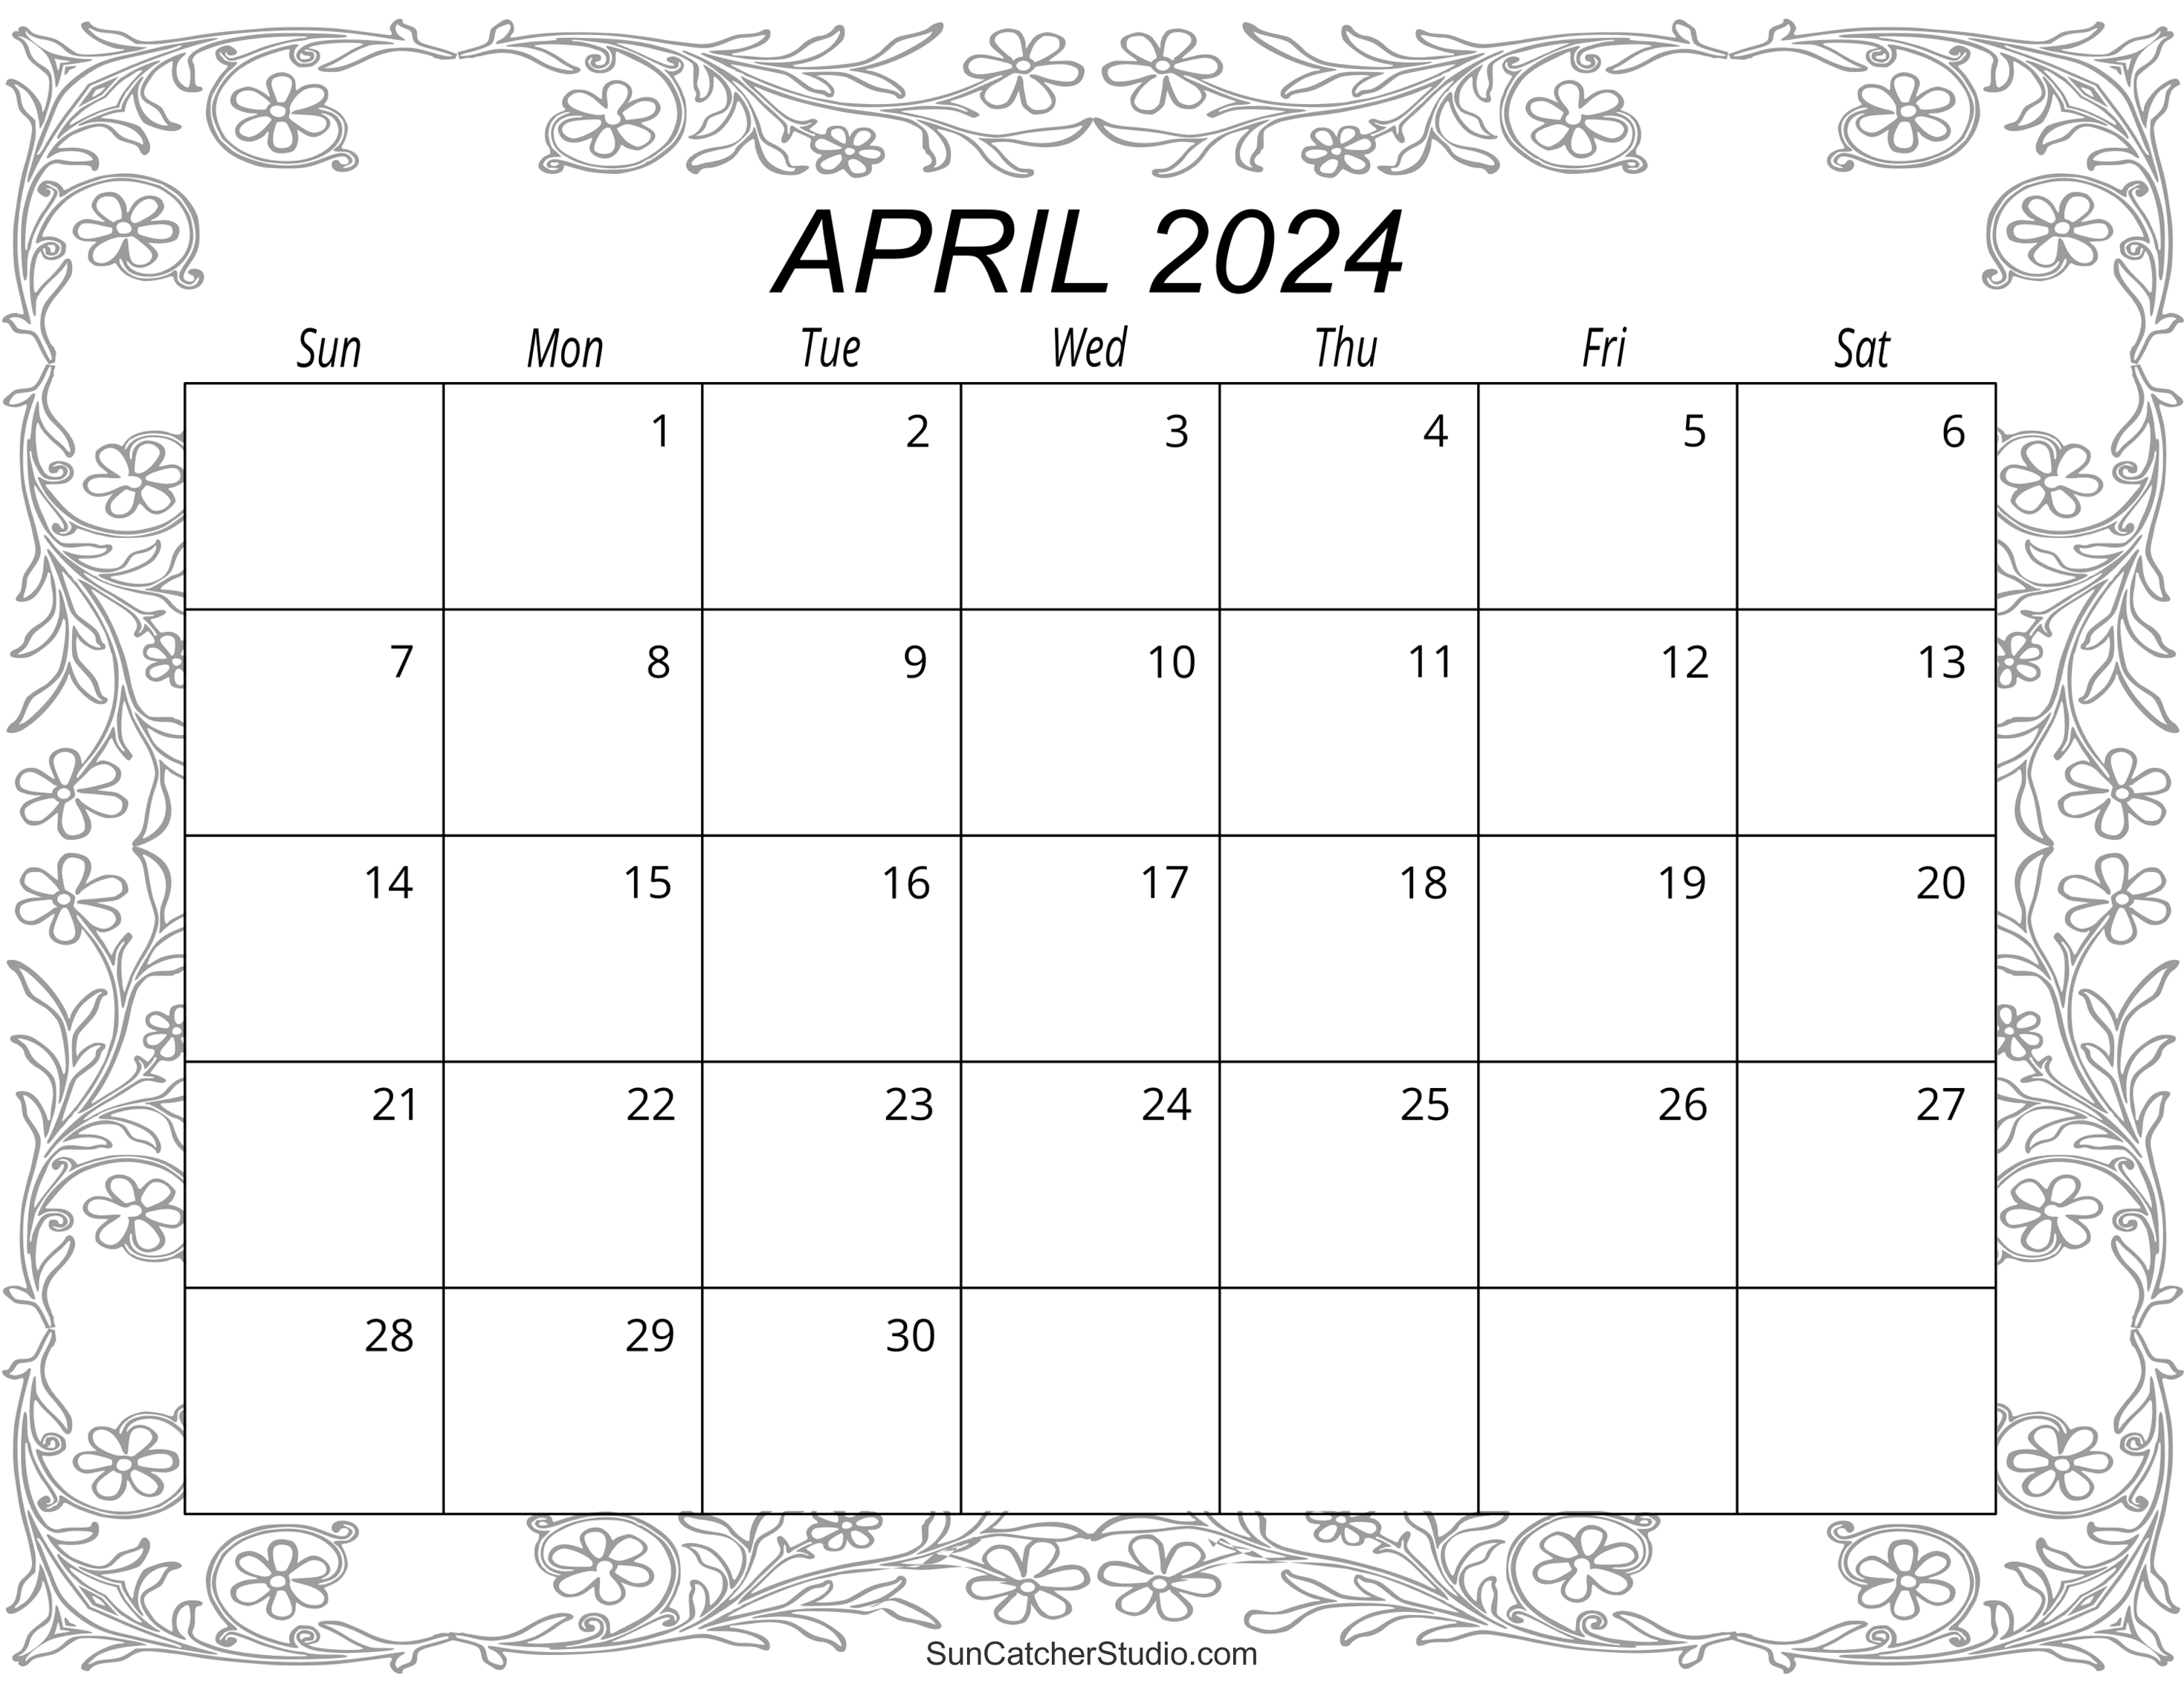 April 2024 Calendar (Free Printable) – Diy Projects, Patterns for Free Printable Calendar April 2024 Landscape